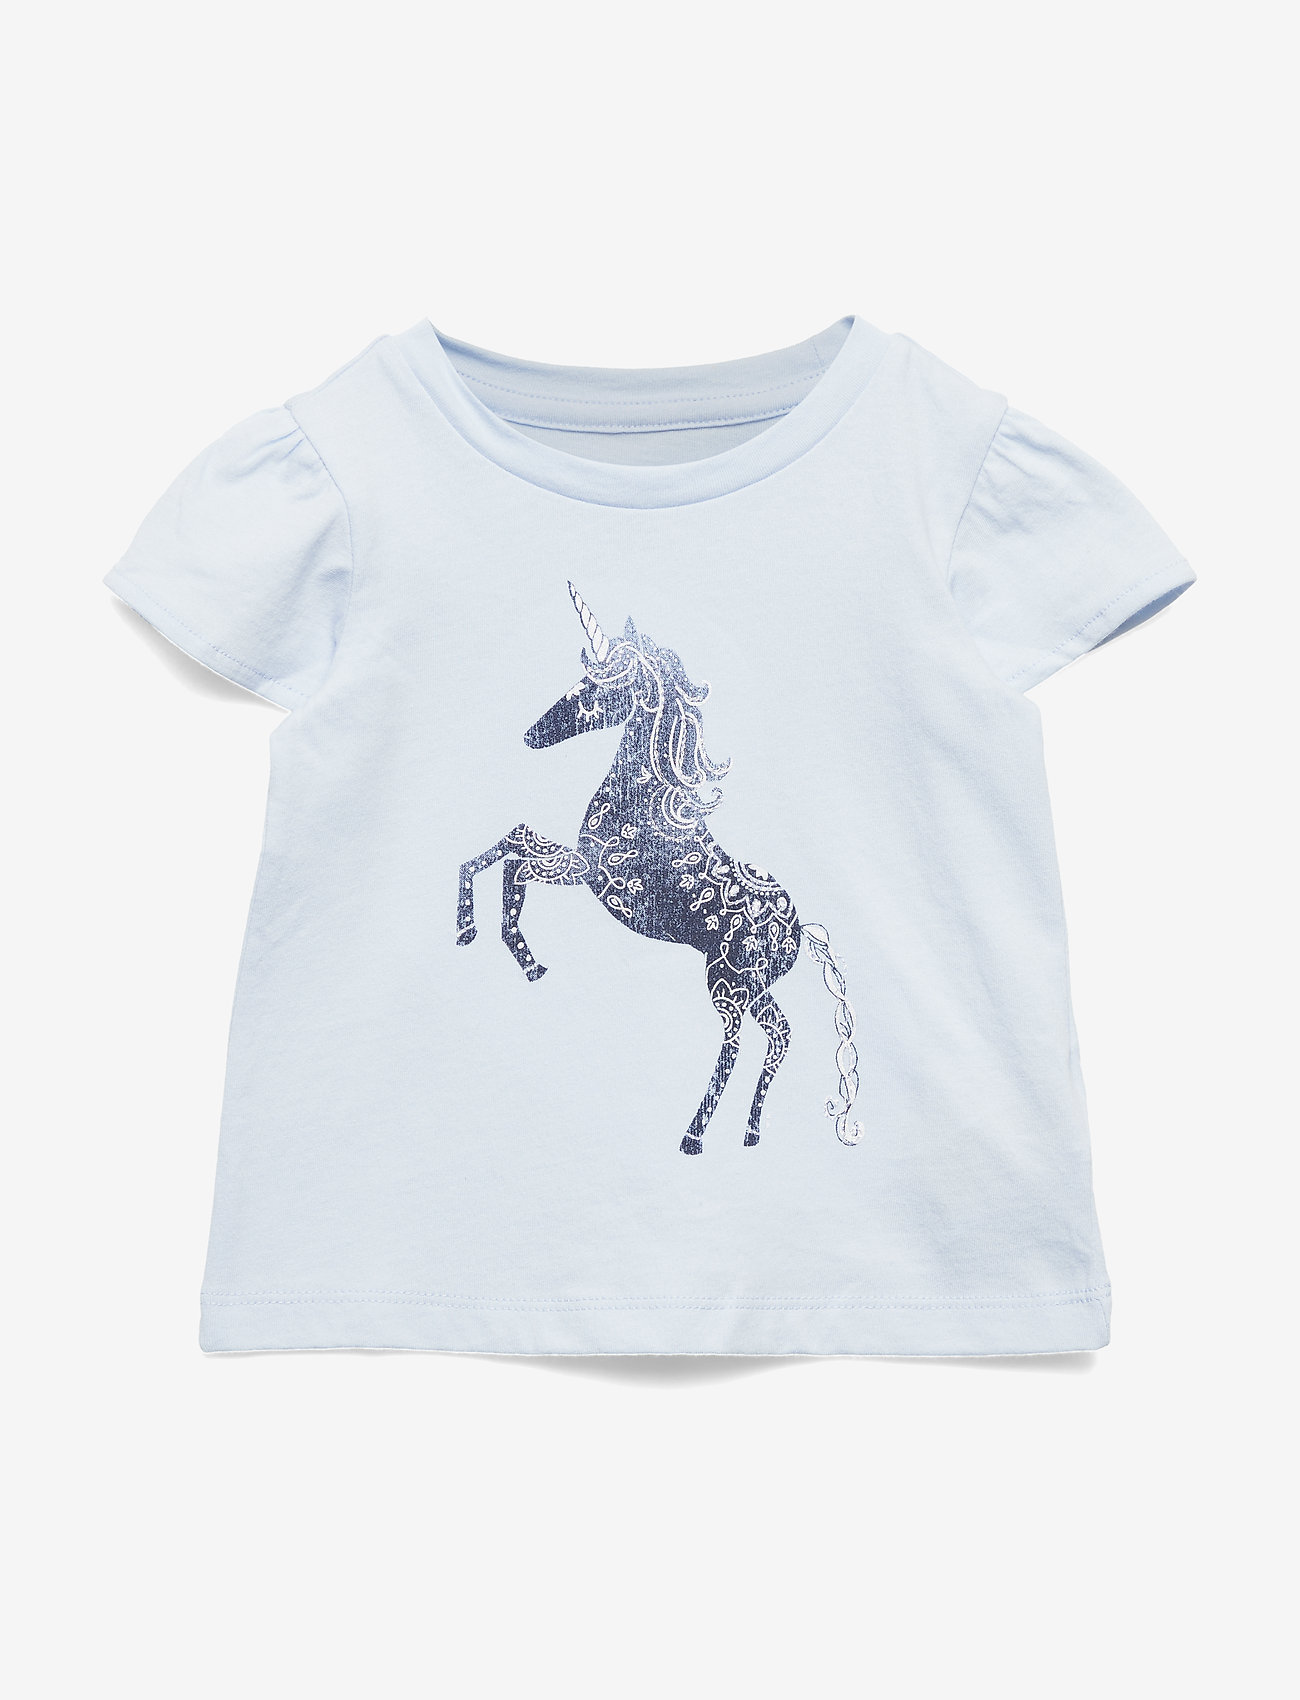 gap unicorn shirt